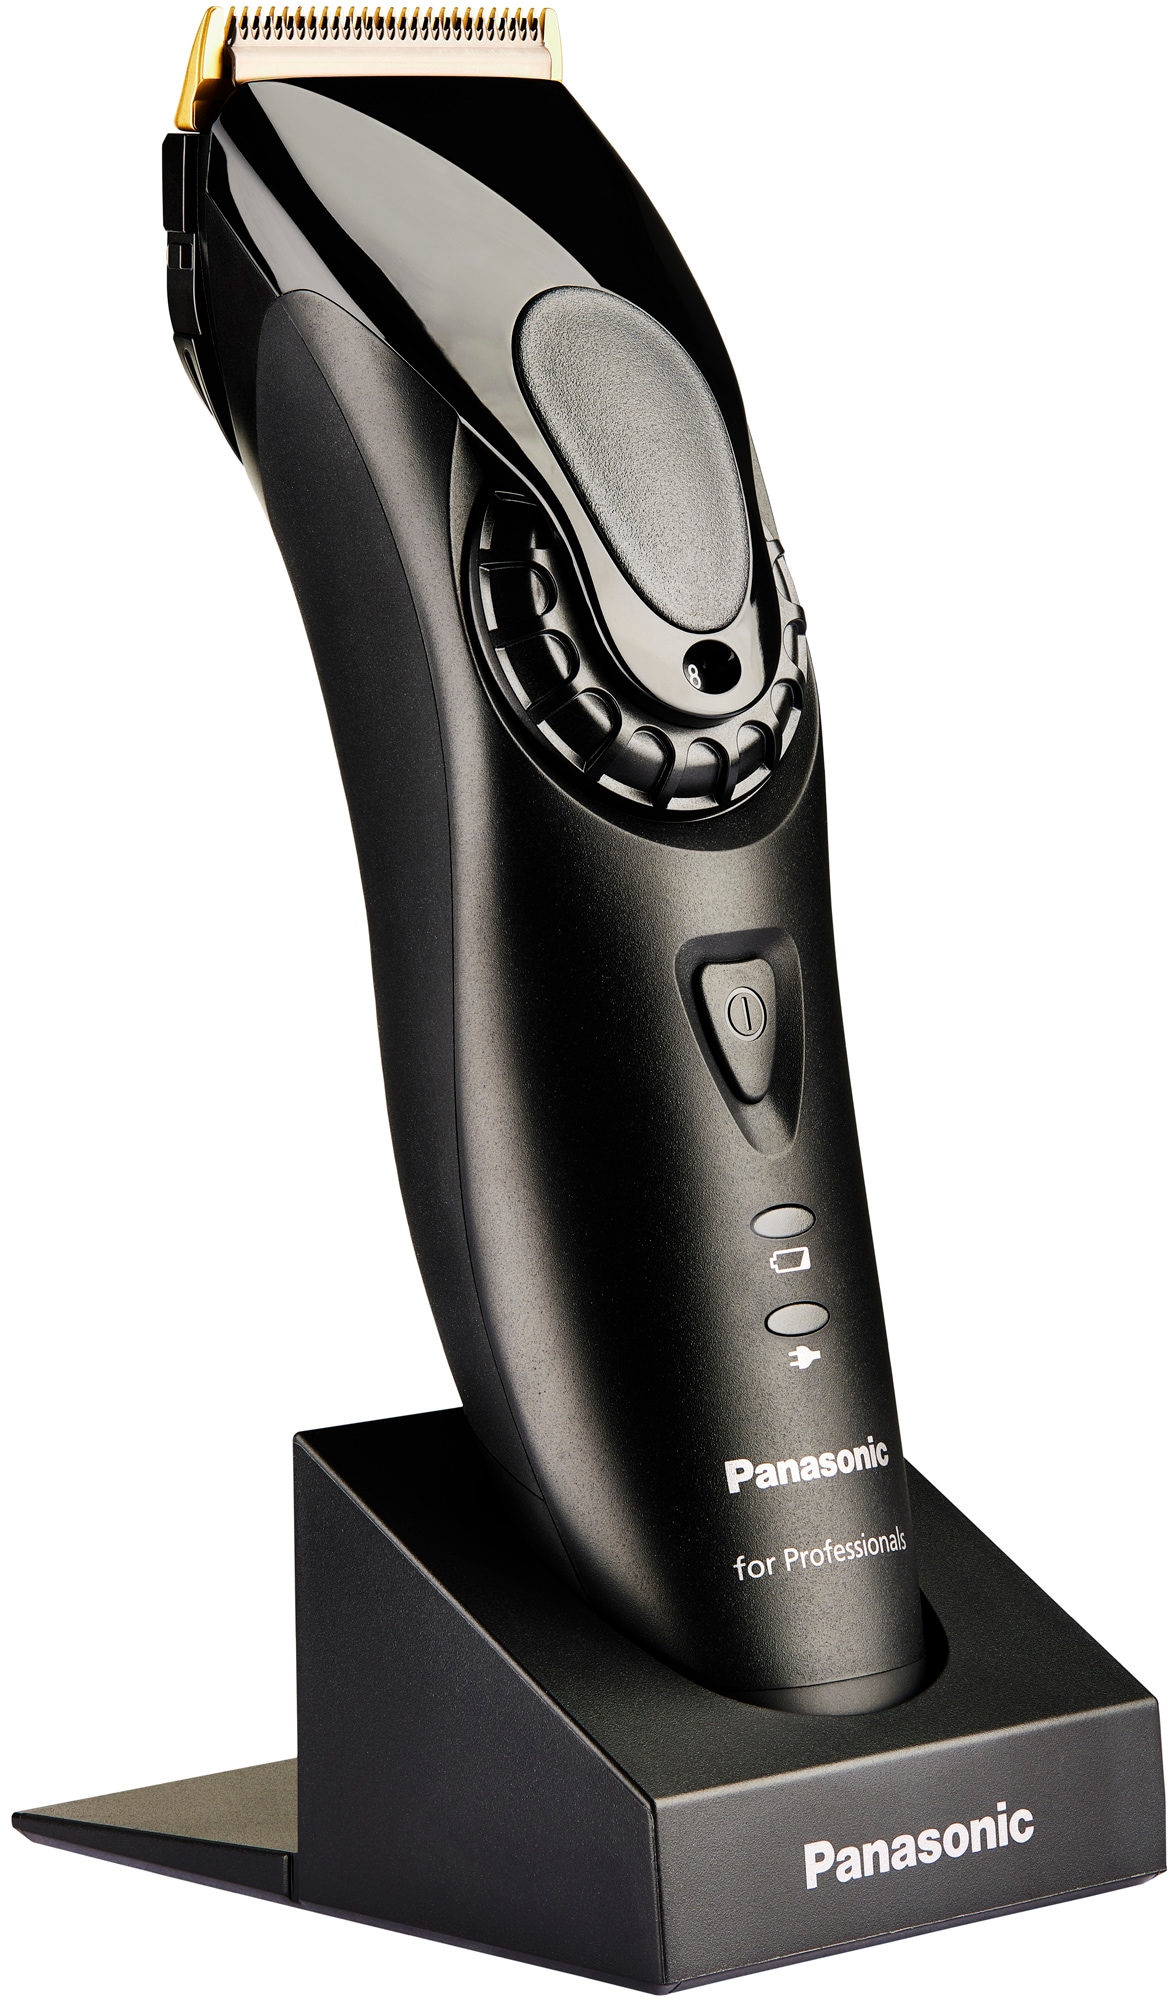 Panasonic Haarschneider »Haarschneidemaschine ER-DGP74«, 3 Aufsätze, Memory- Effect, Linearmotor mit Constant Control